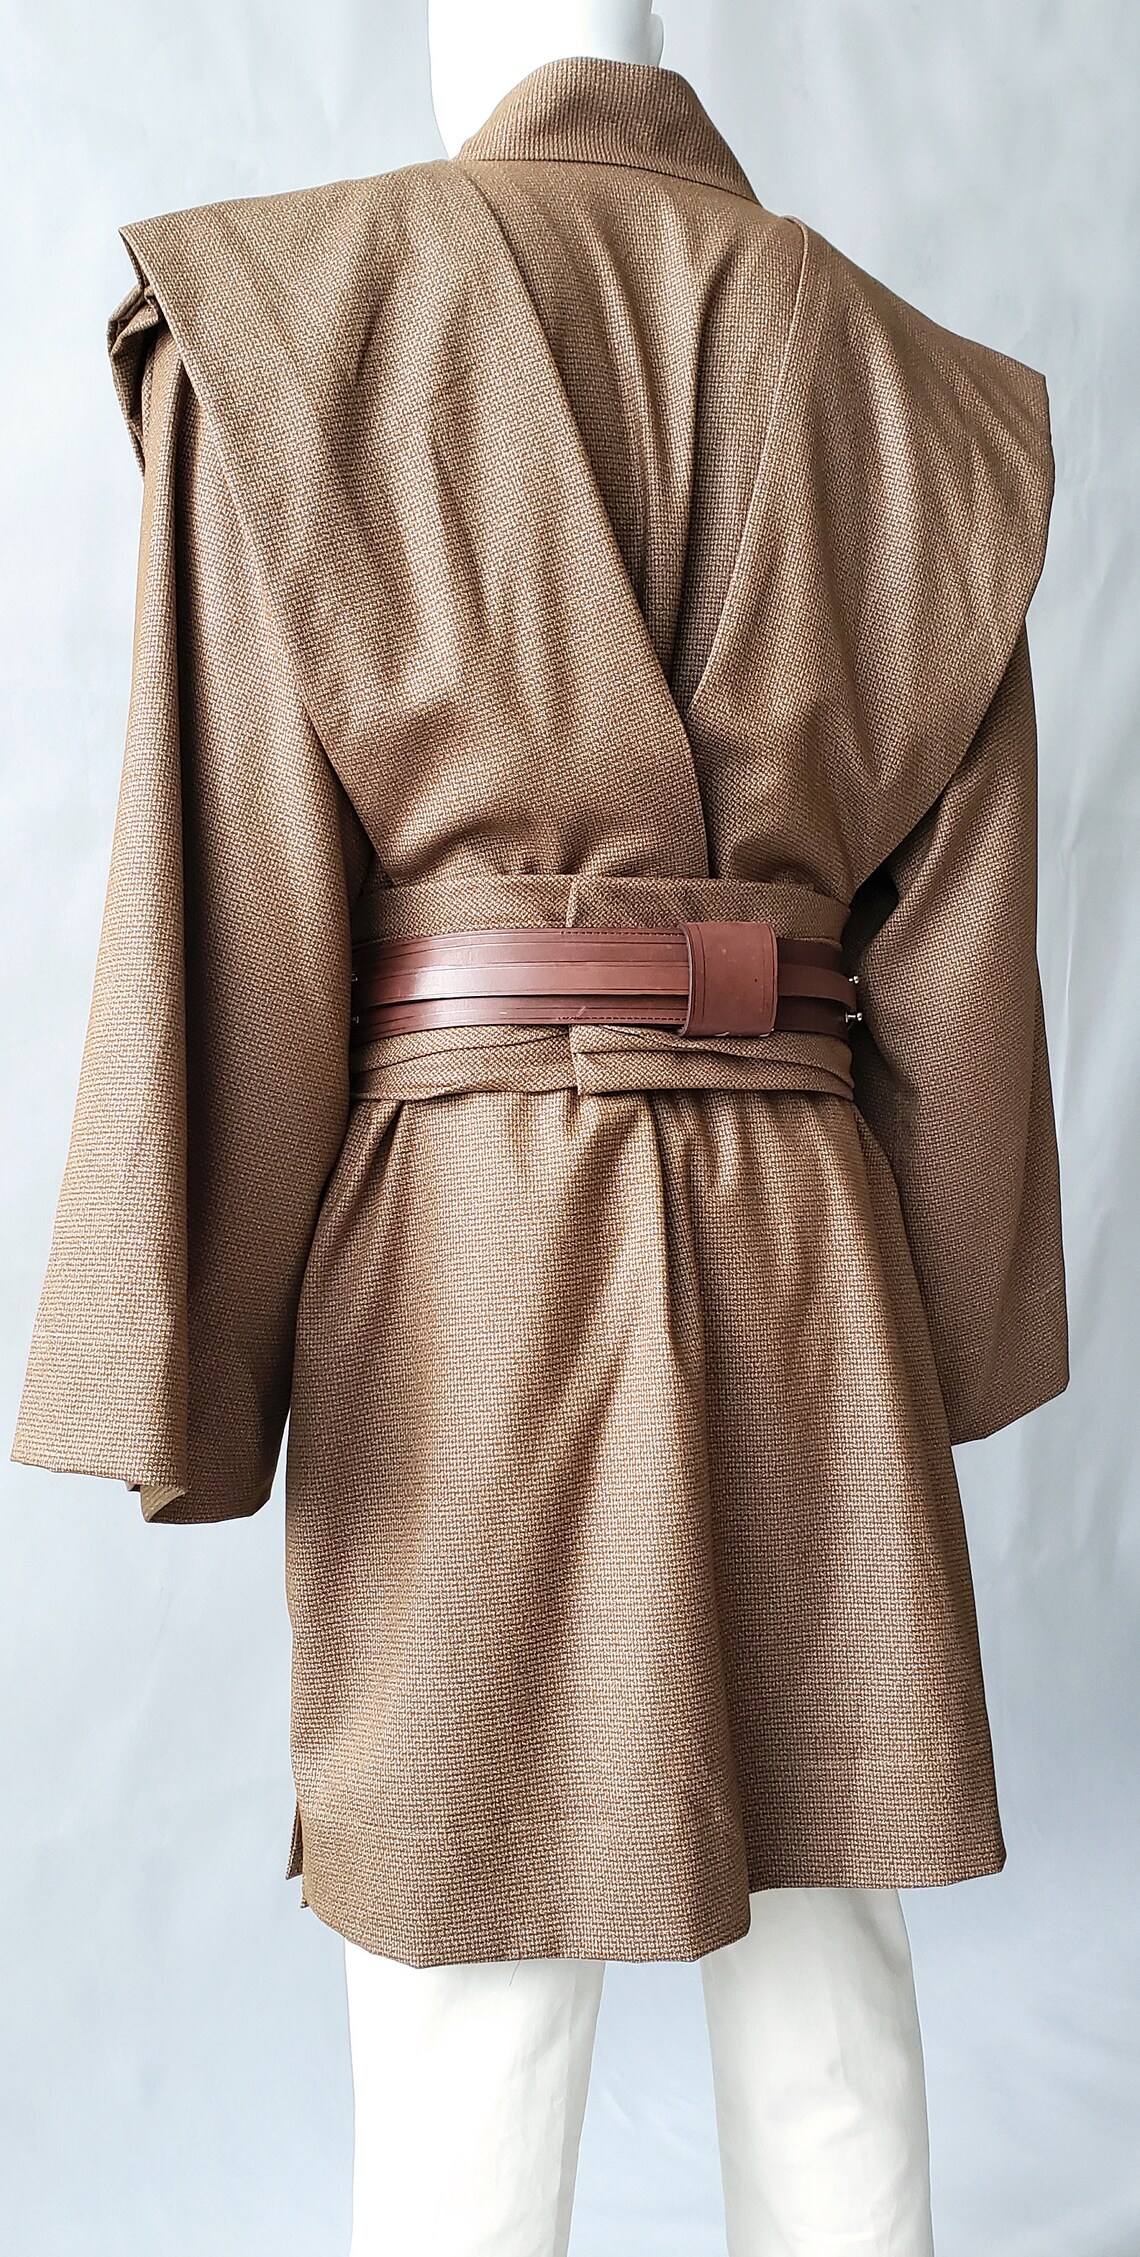 Mace Windu costume with Jedi robe/cloak | Etsy